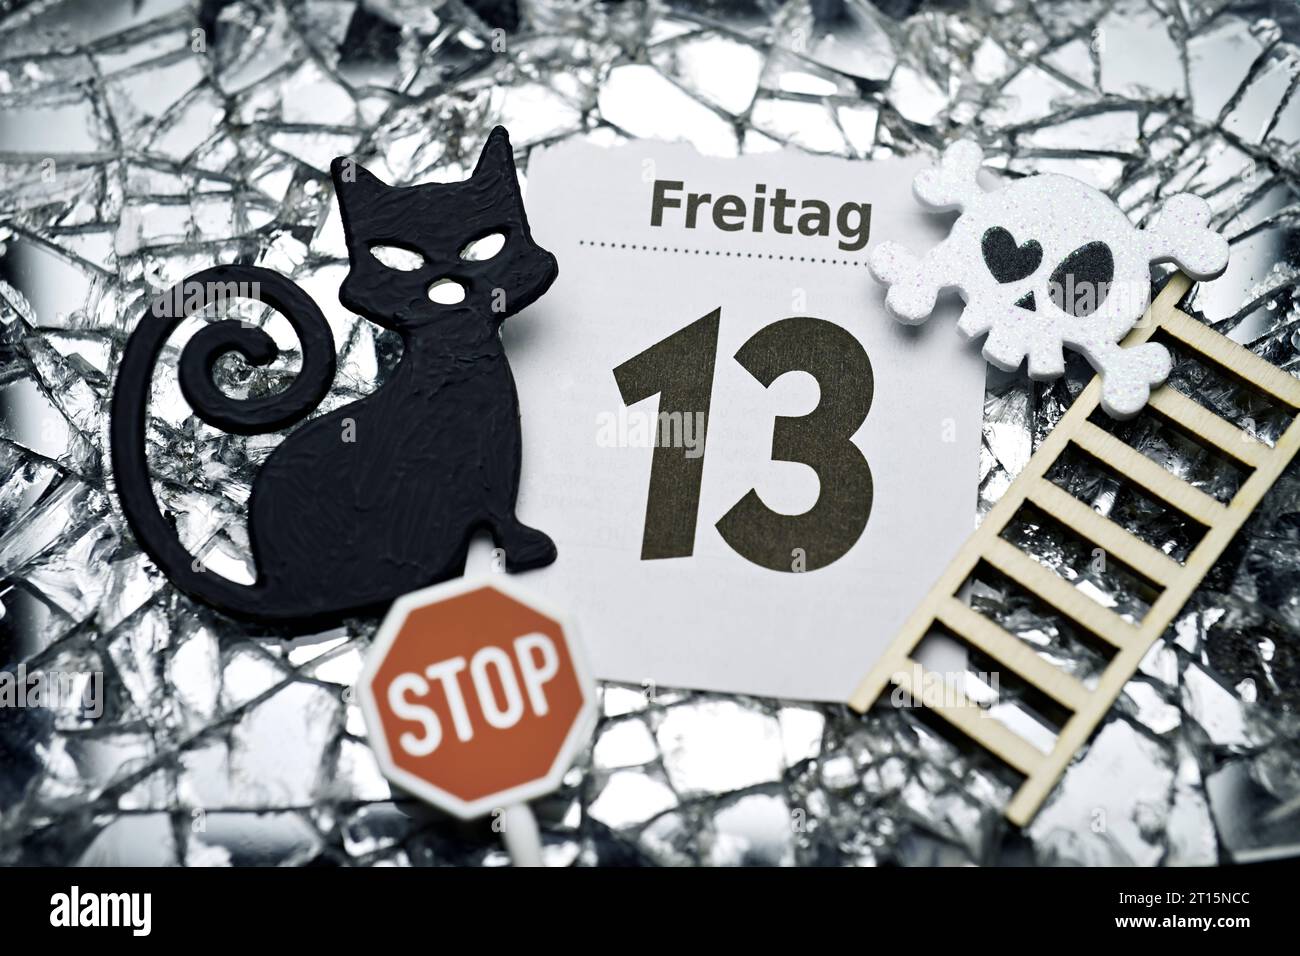 Supi Freitag - Free animated GIF - PicMix